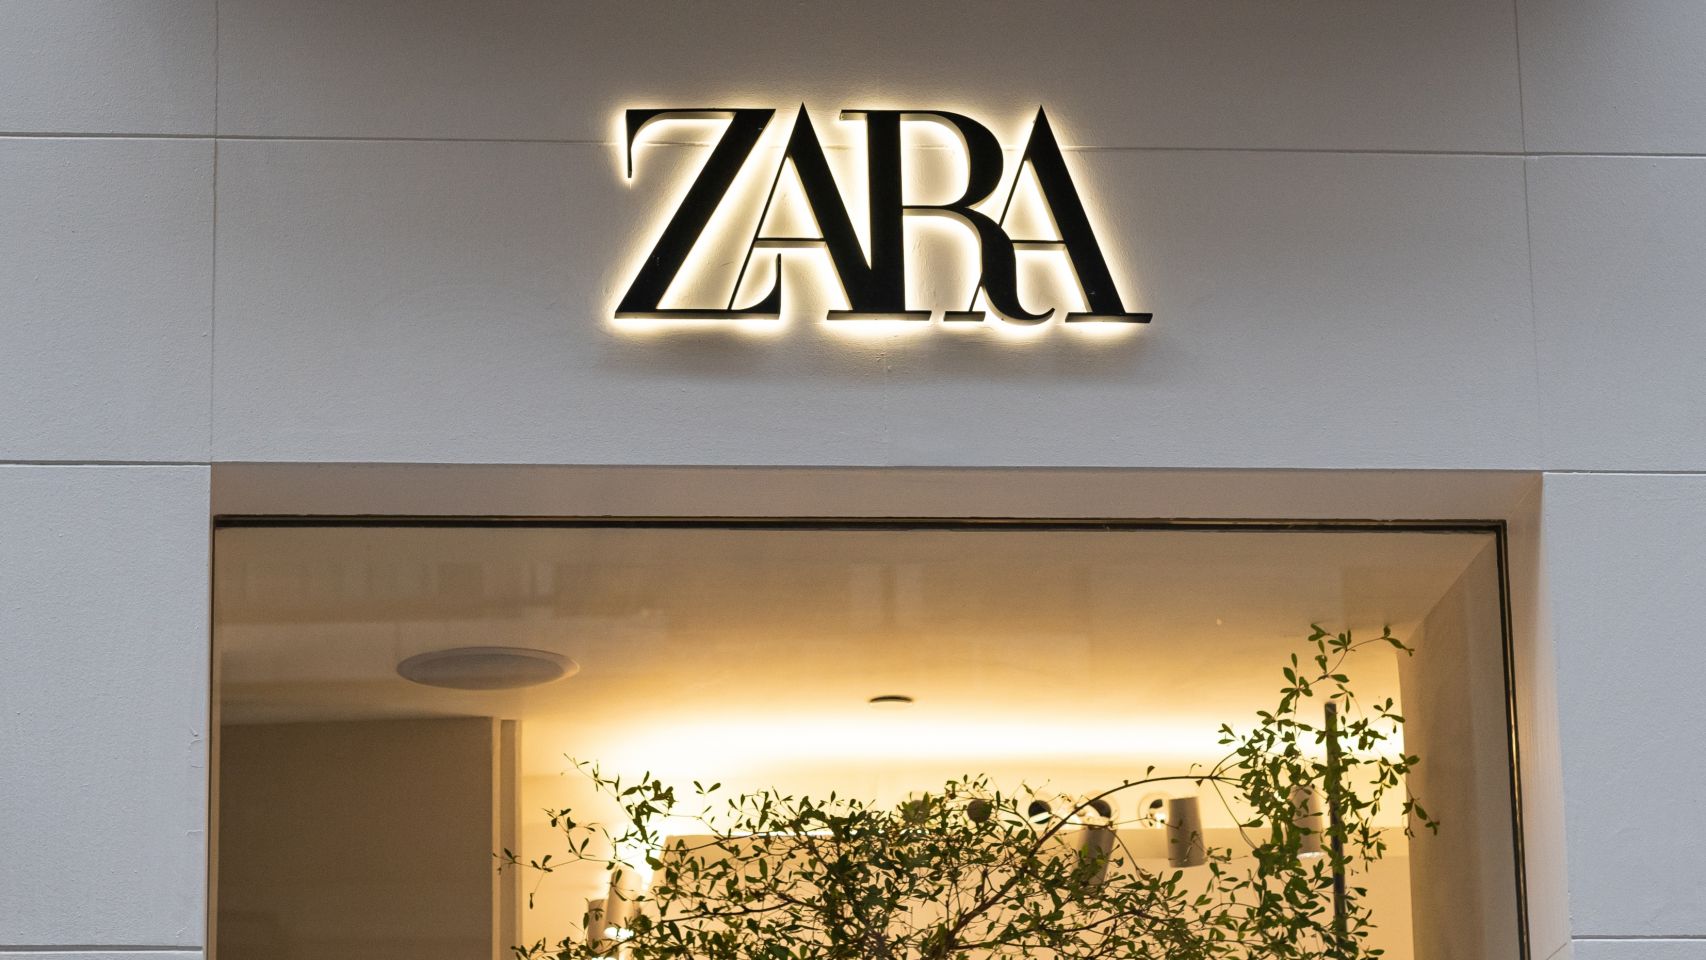 Tienda de Zara.
